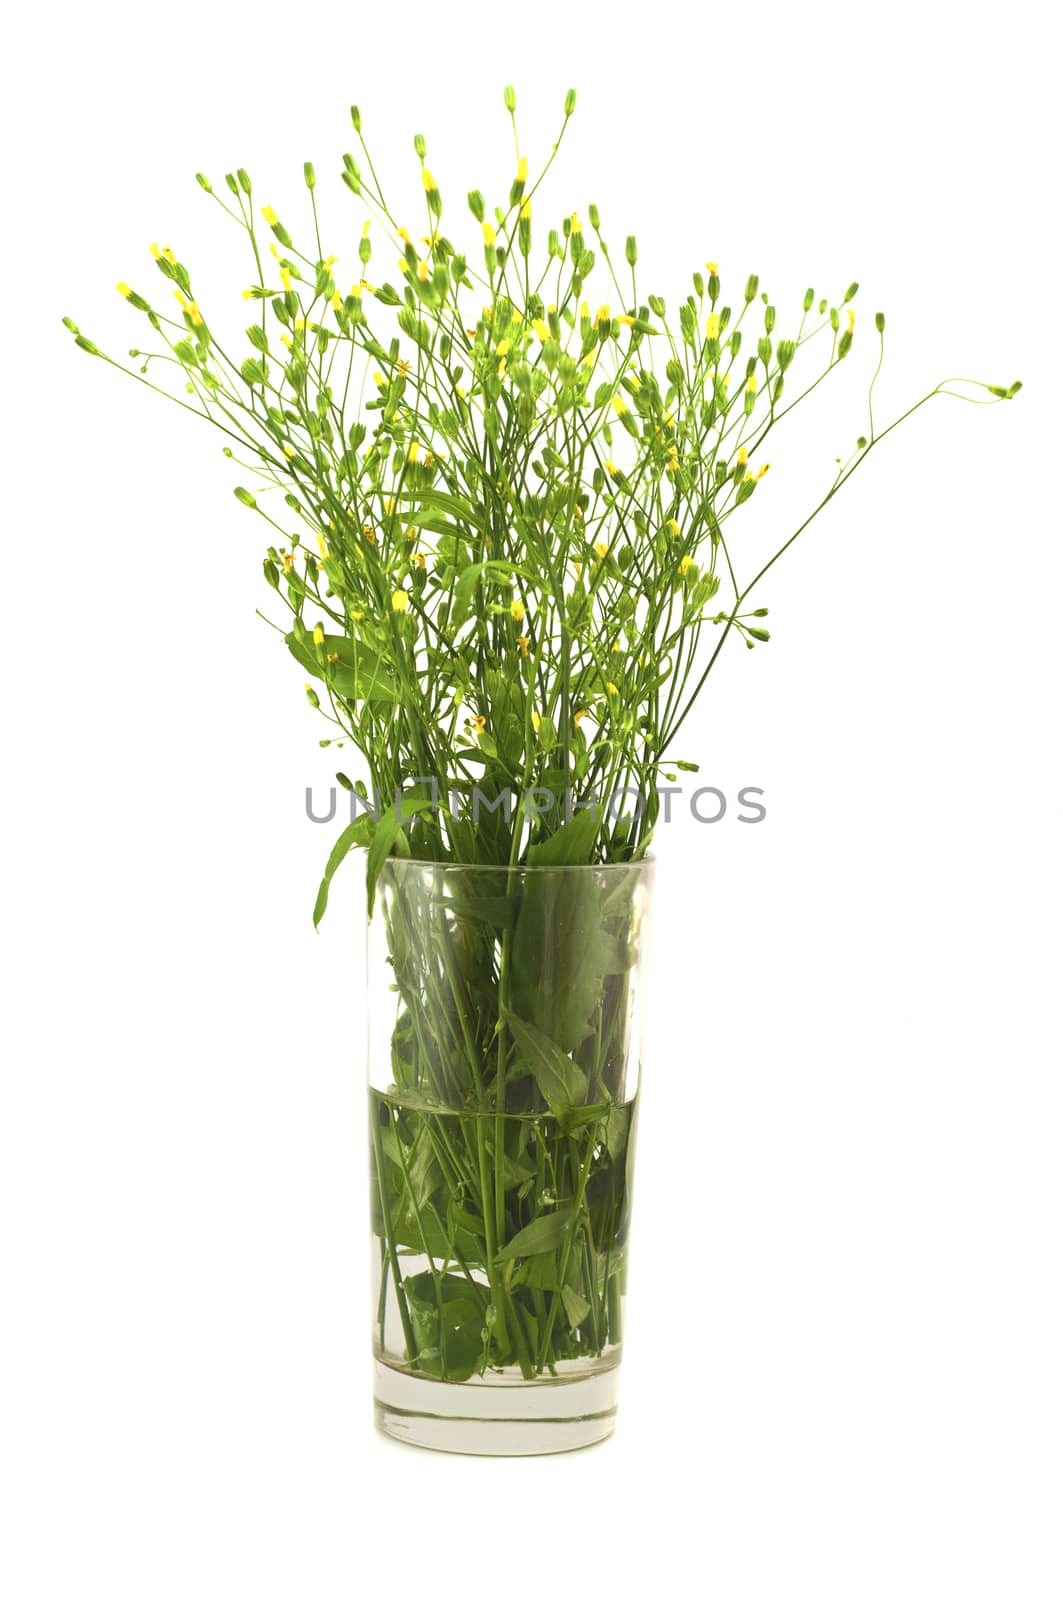 bouquet flowers in a glass by ozornina